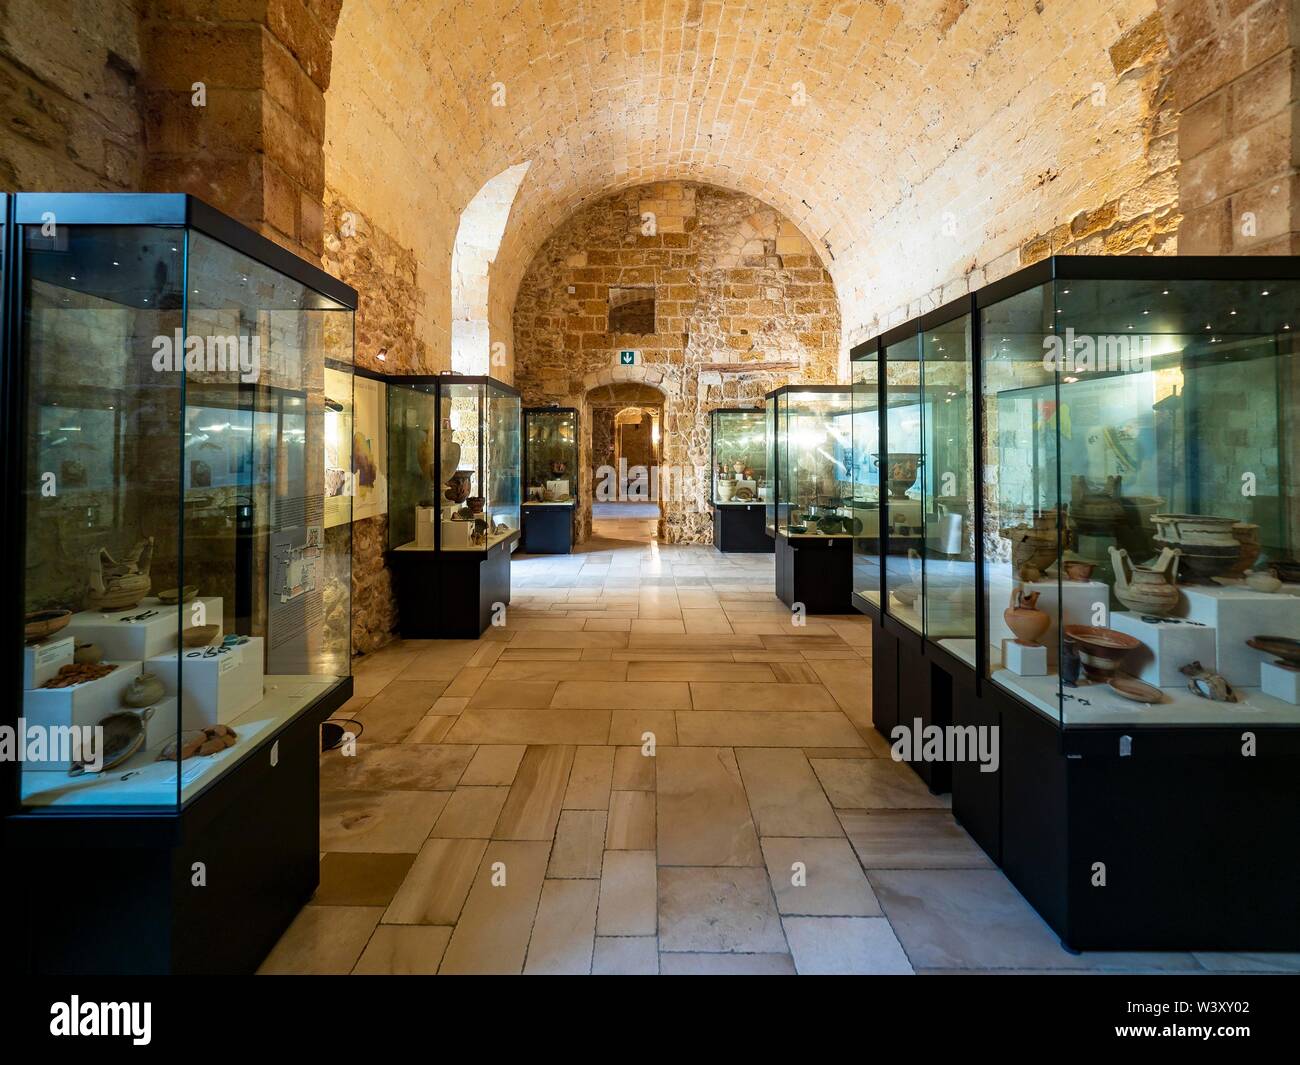 Exhibition room, Norman-Swabian castle, Mesagne, Puglia, Italy Stock Photo